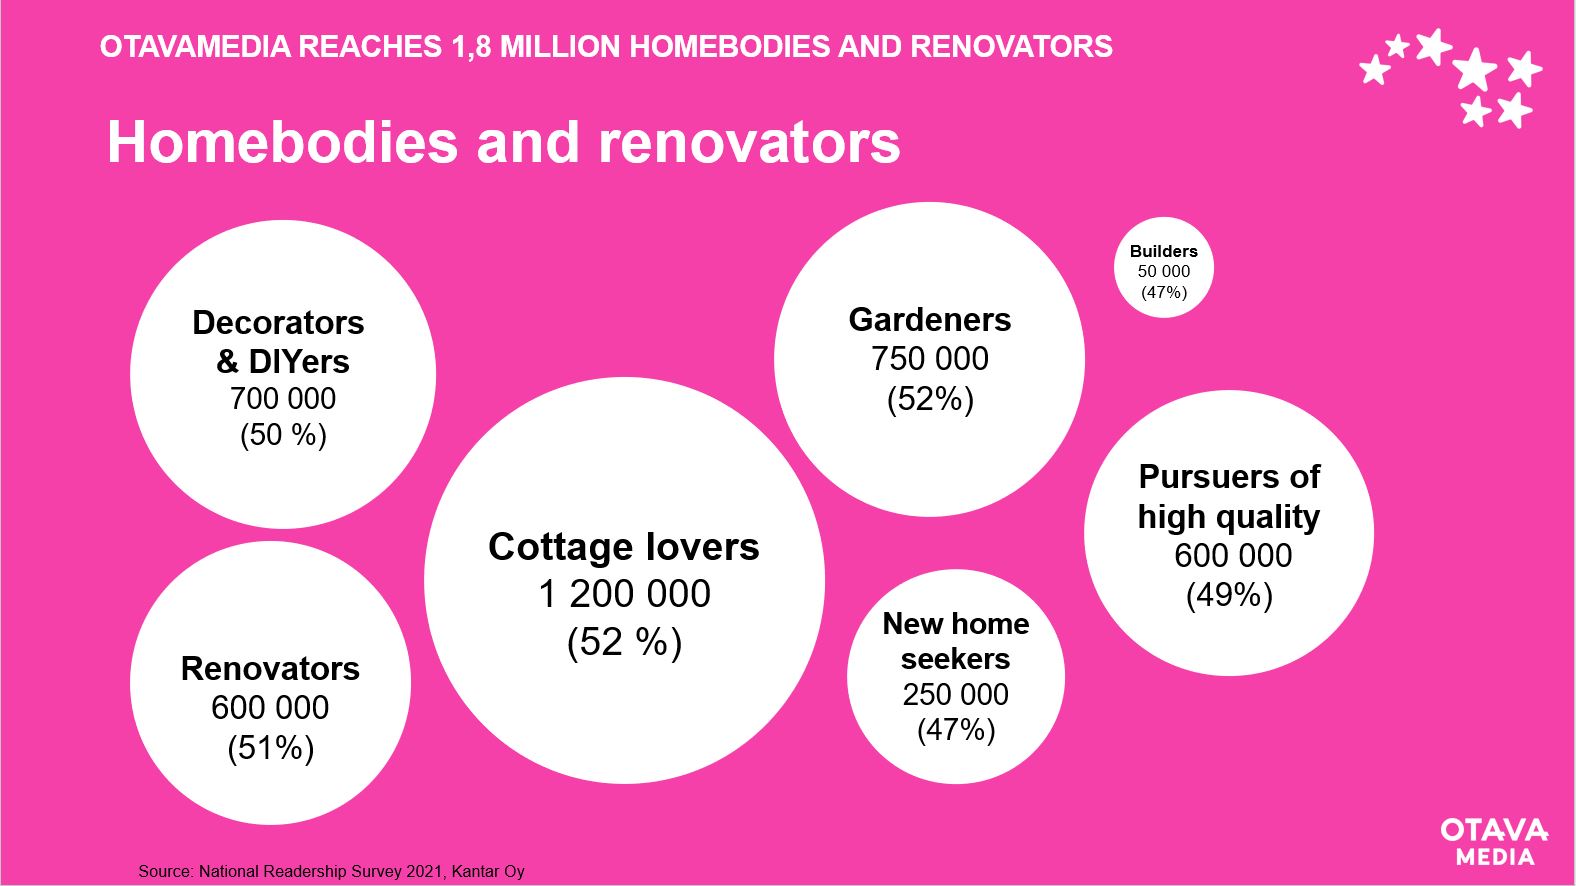 Homebodies and renovators reach